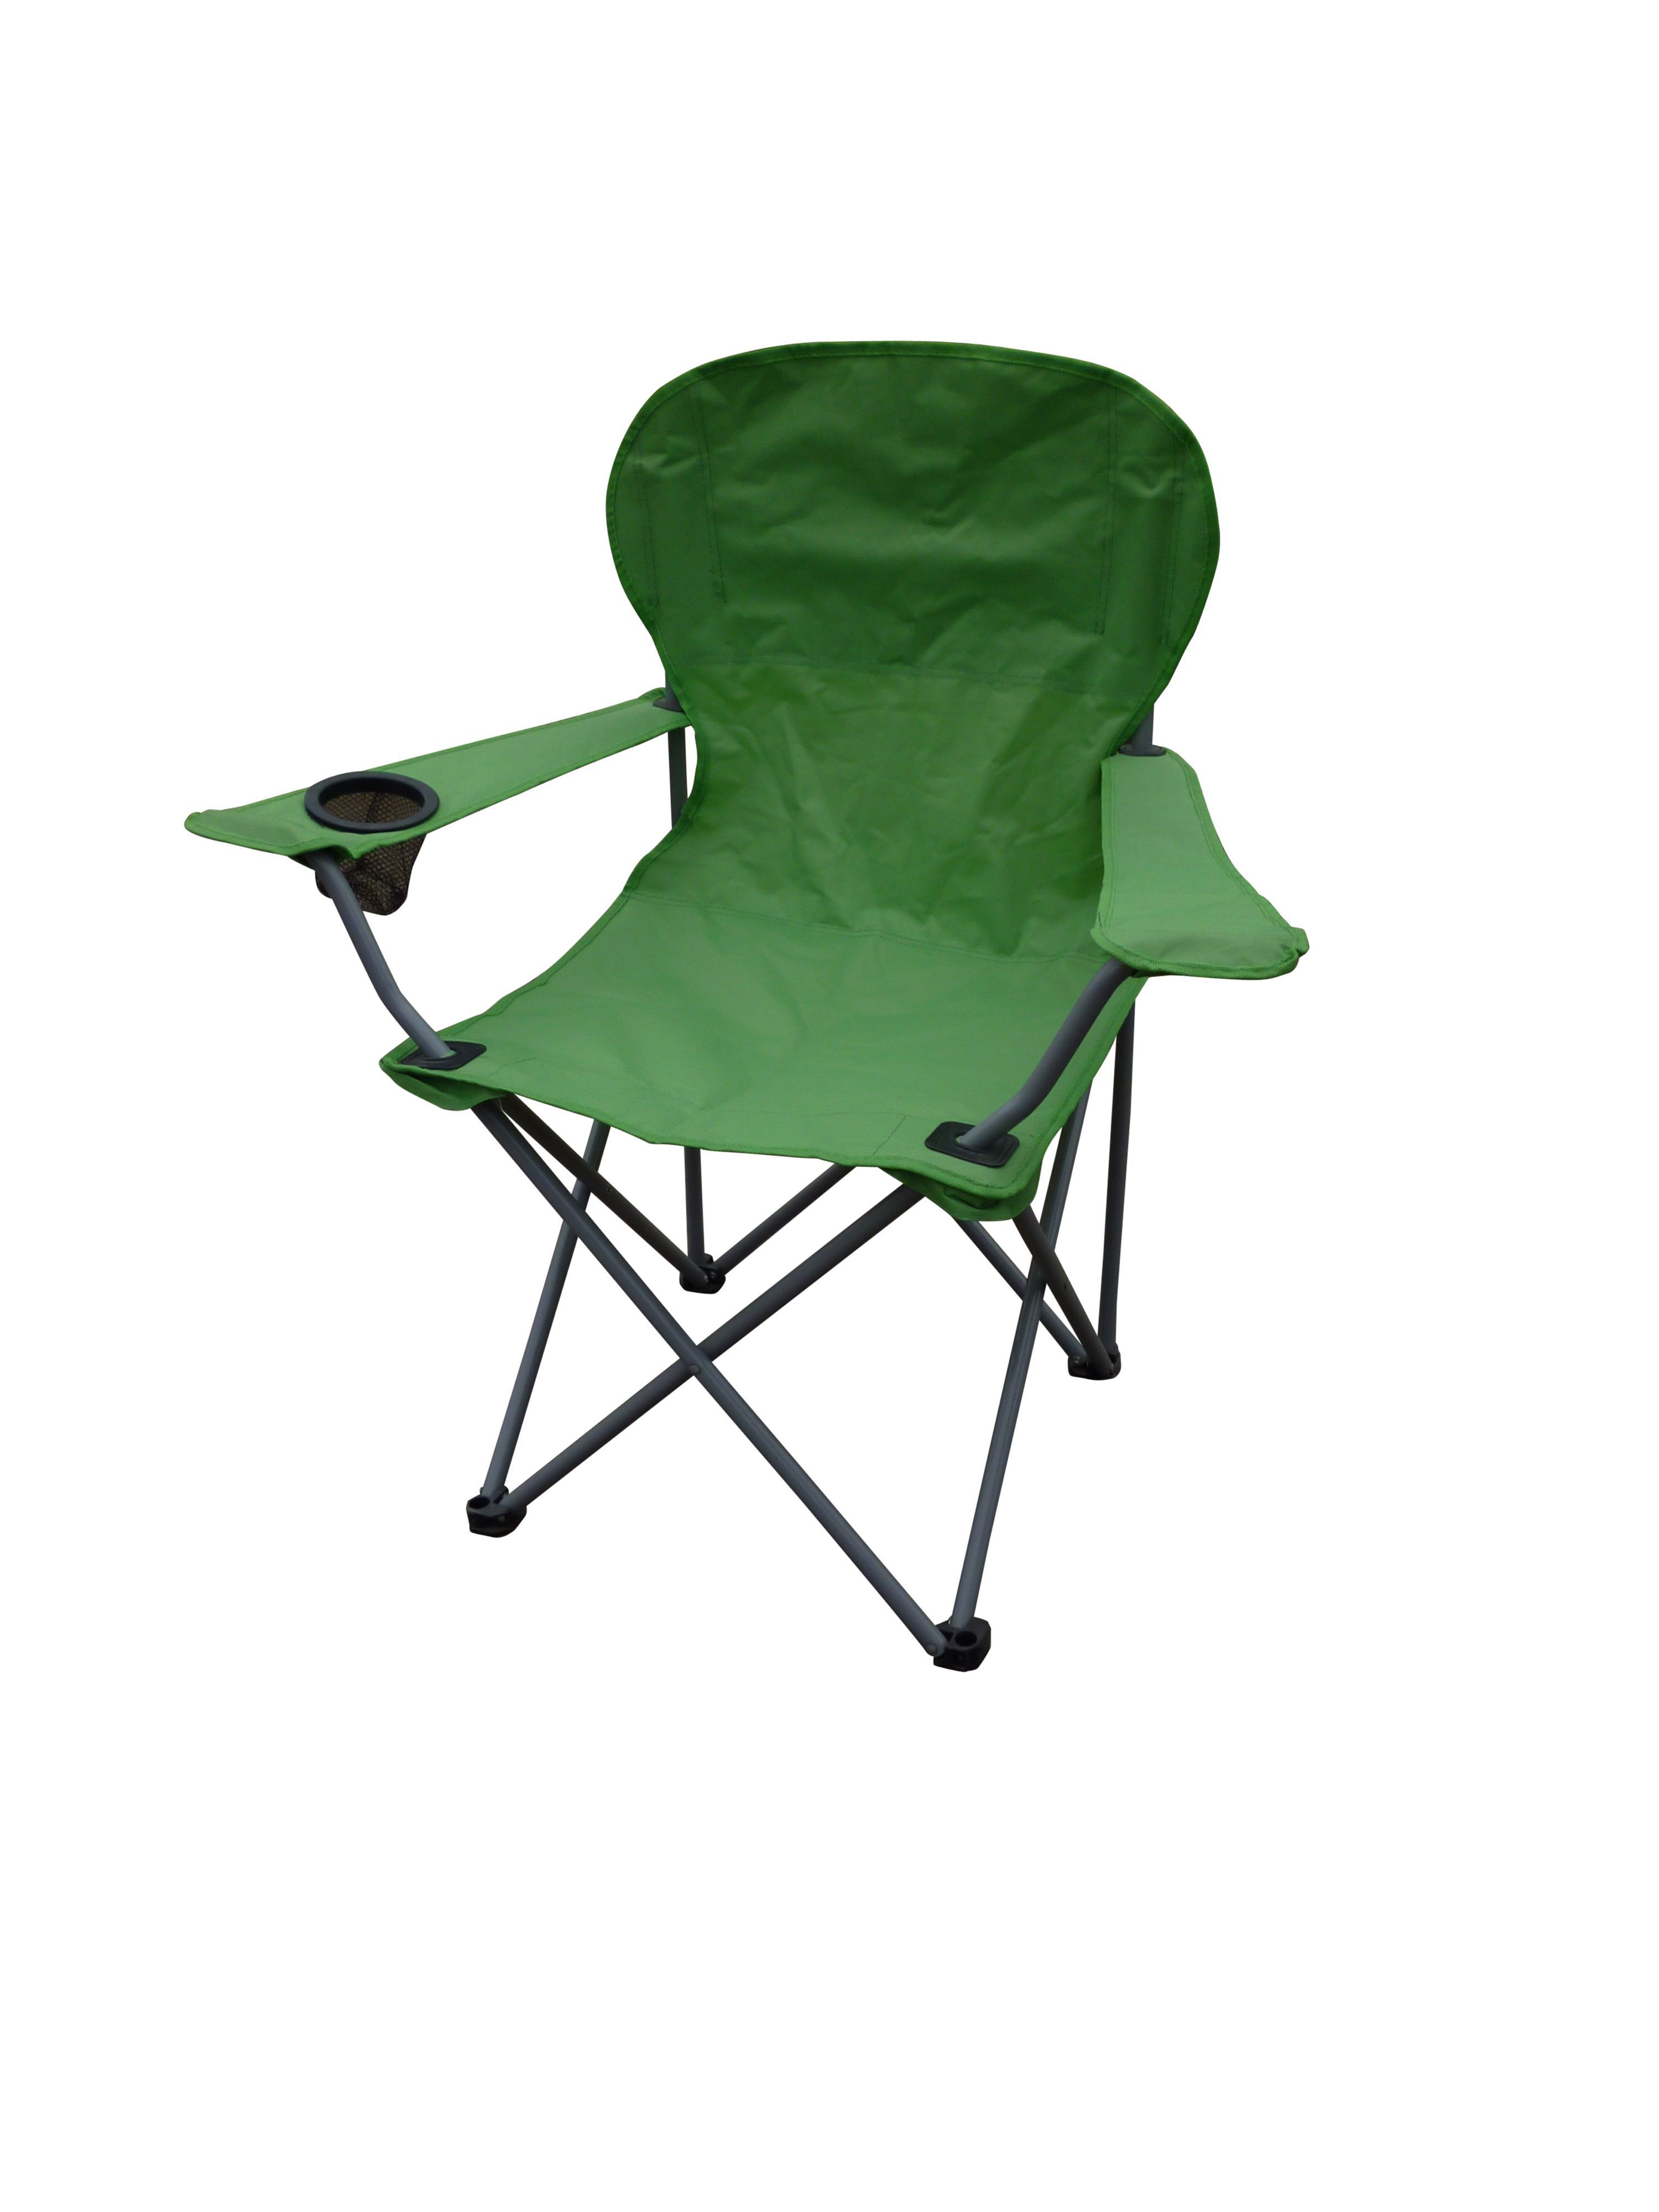 B&q Childrens Camping Chair - Alvi starmild